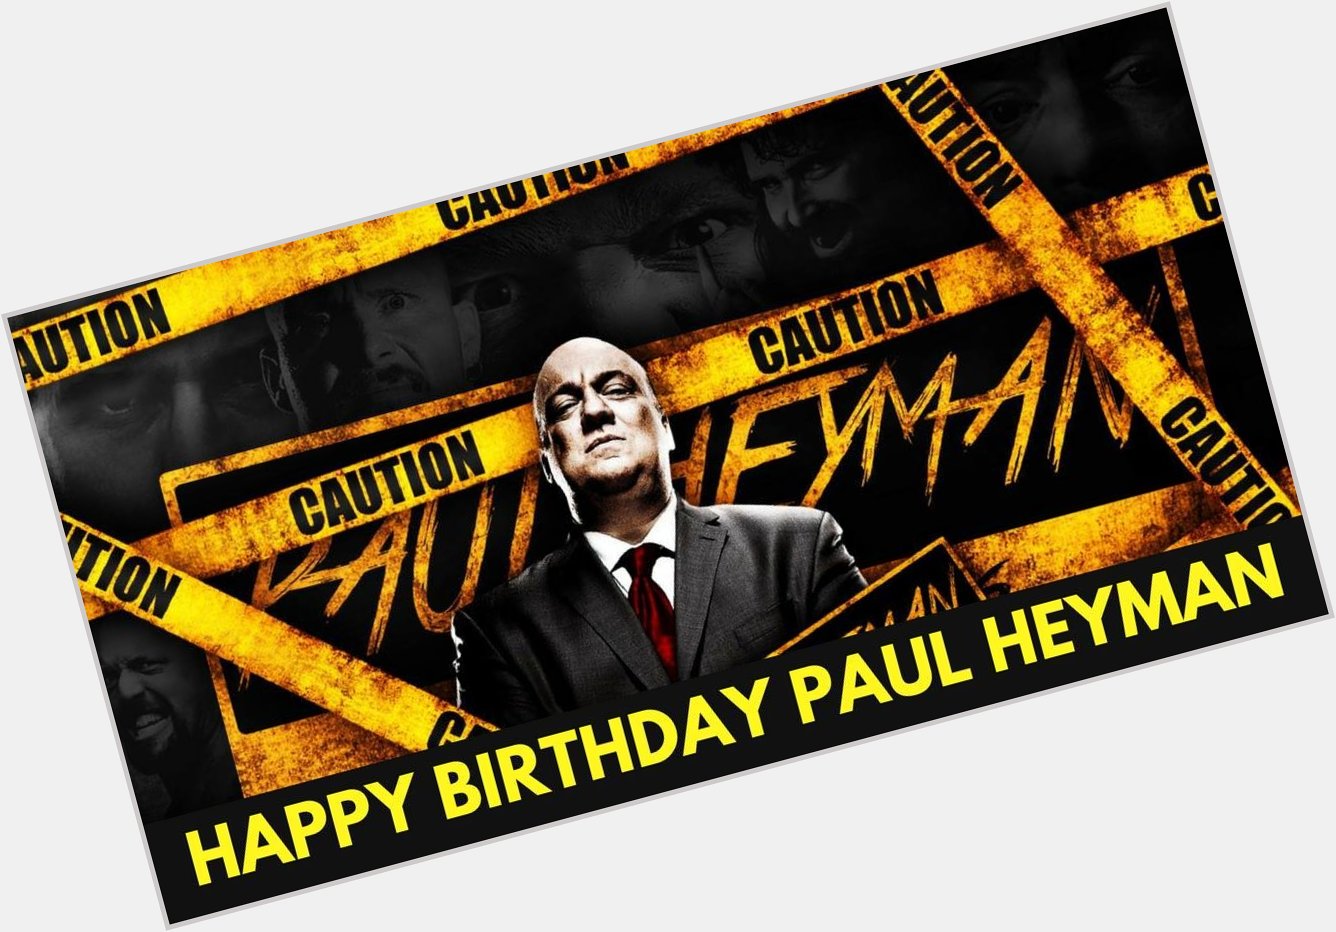 Happy birthday Paul Heyman 